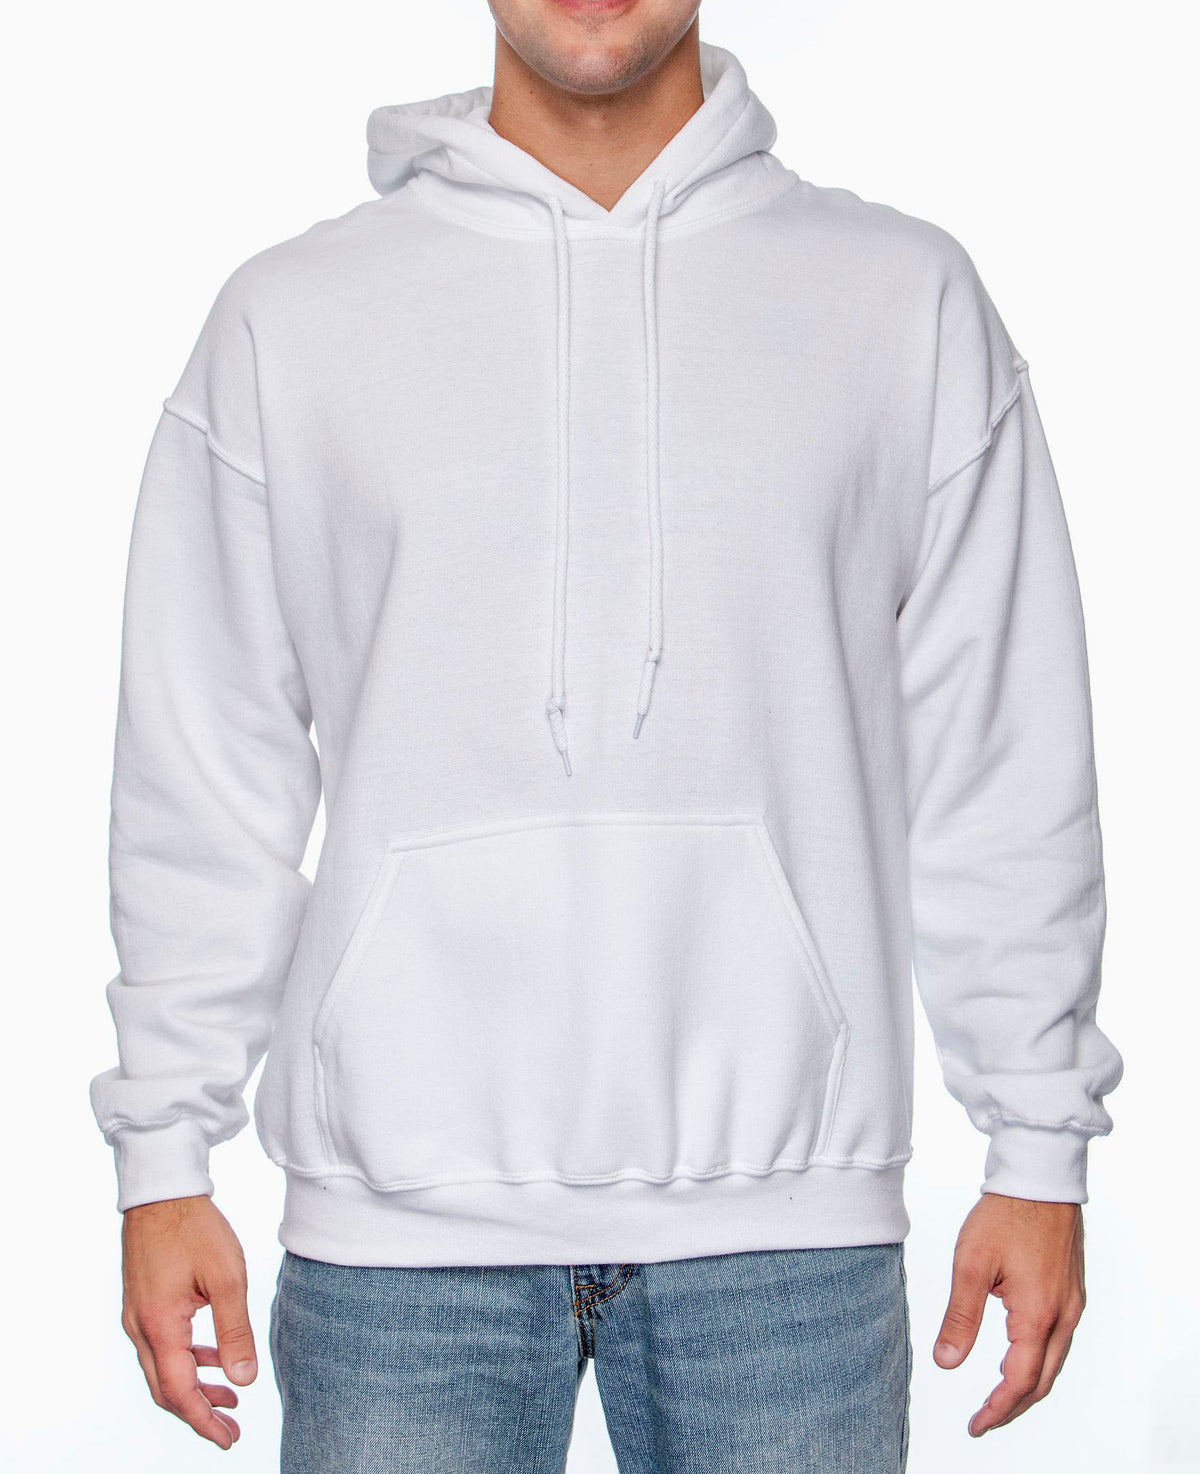  Heavy Blend Adult Hooded Sweatshirt